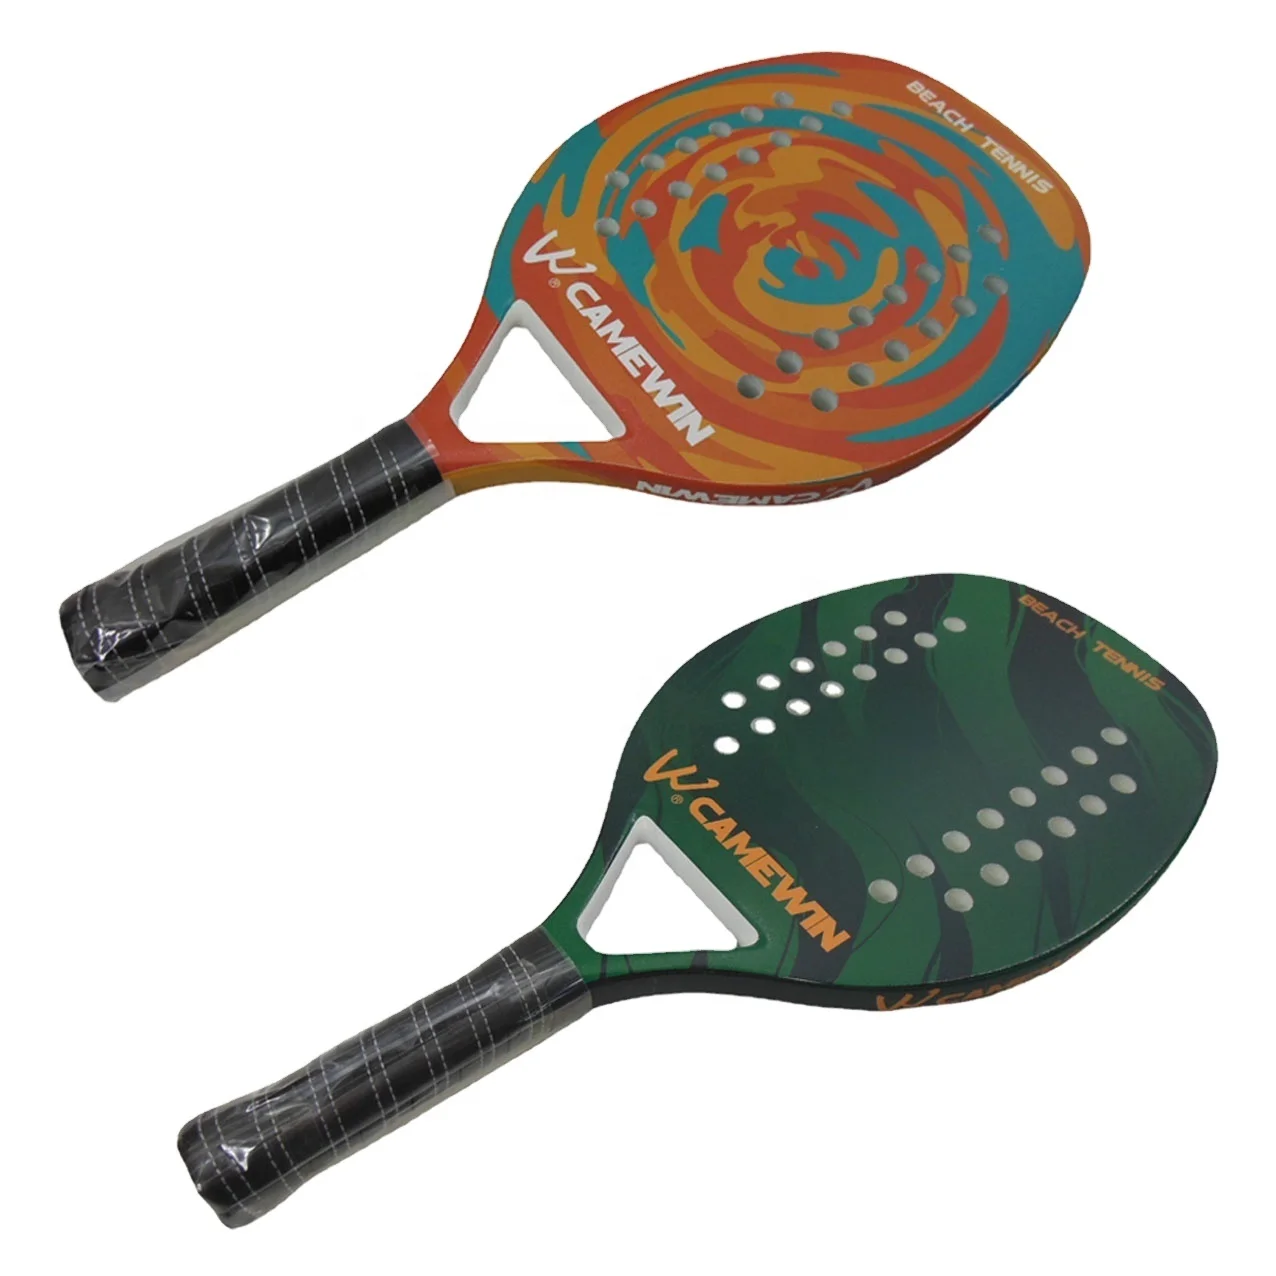 

customs Indoor Outdoor Paddel badminton Tennis paddle Professional carbon fiber beach tennis racket